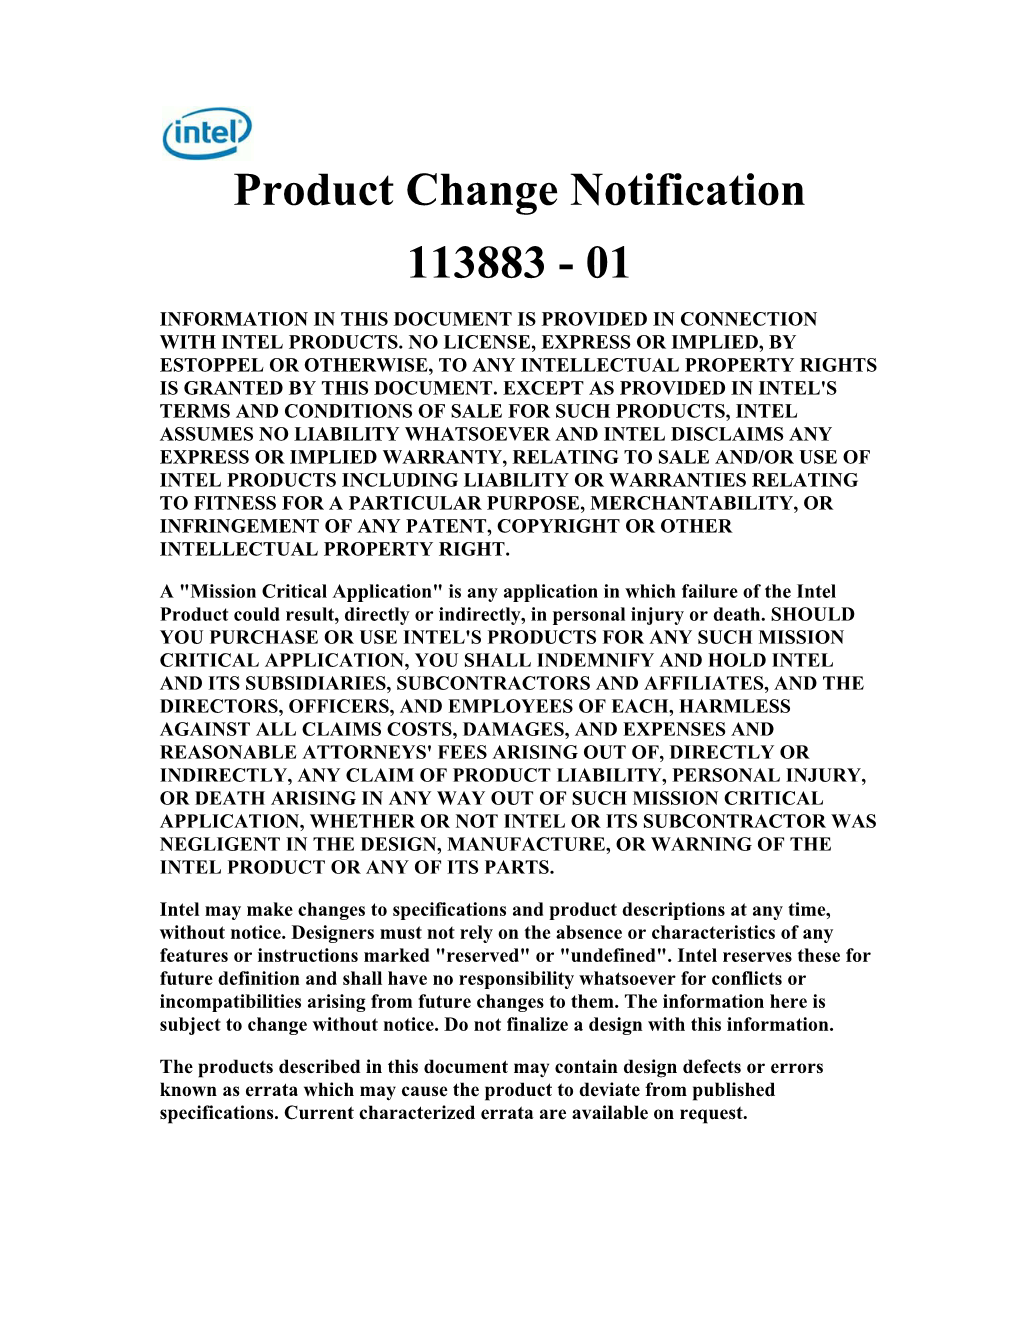 Product Change Notification 113883